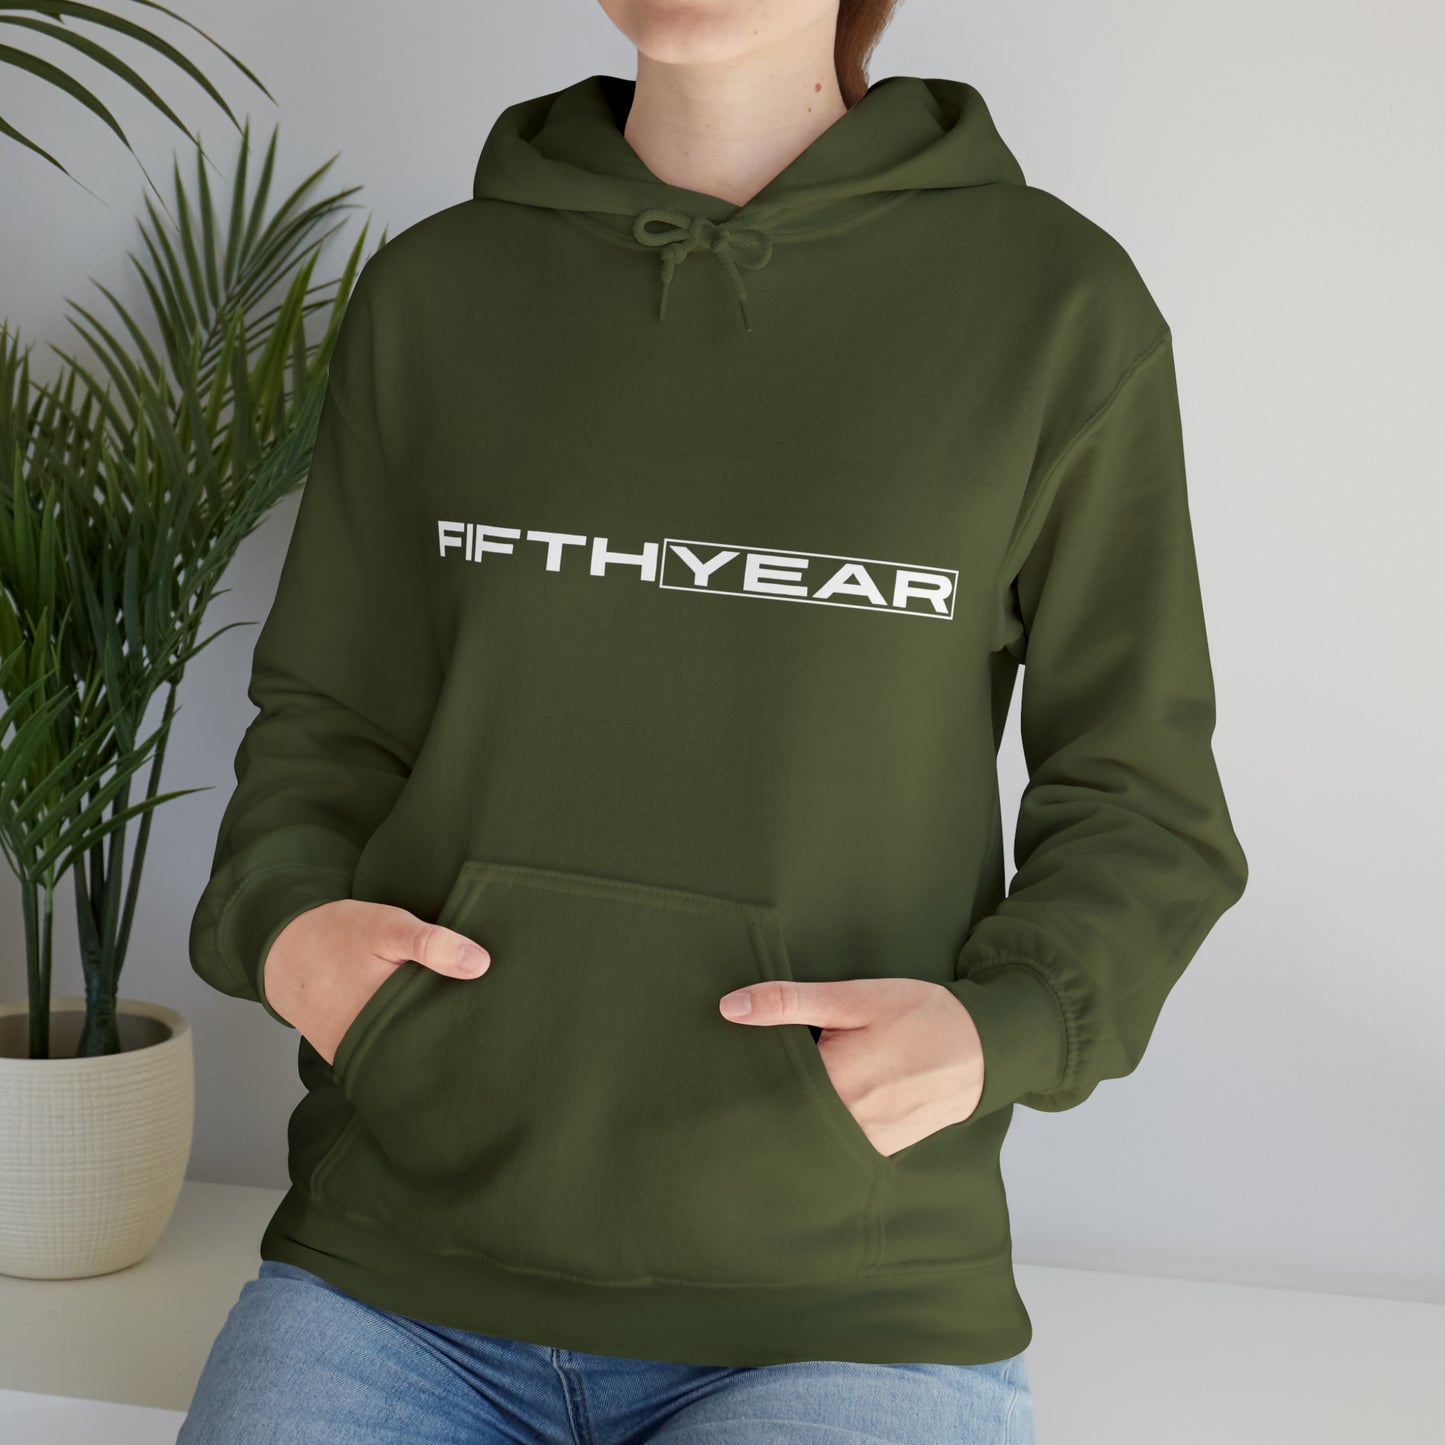 Fifth Year - Unisex Heavy Blend™ Hooded Sweatshirt